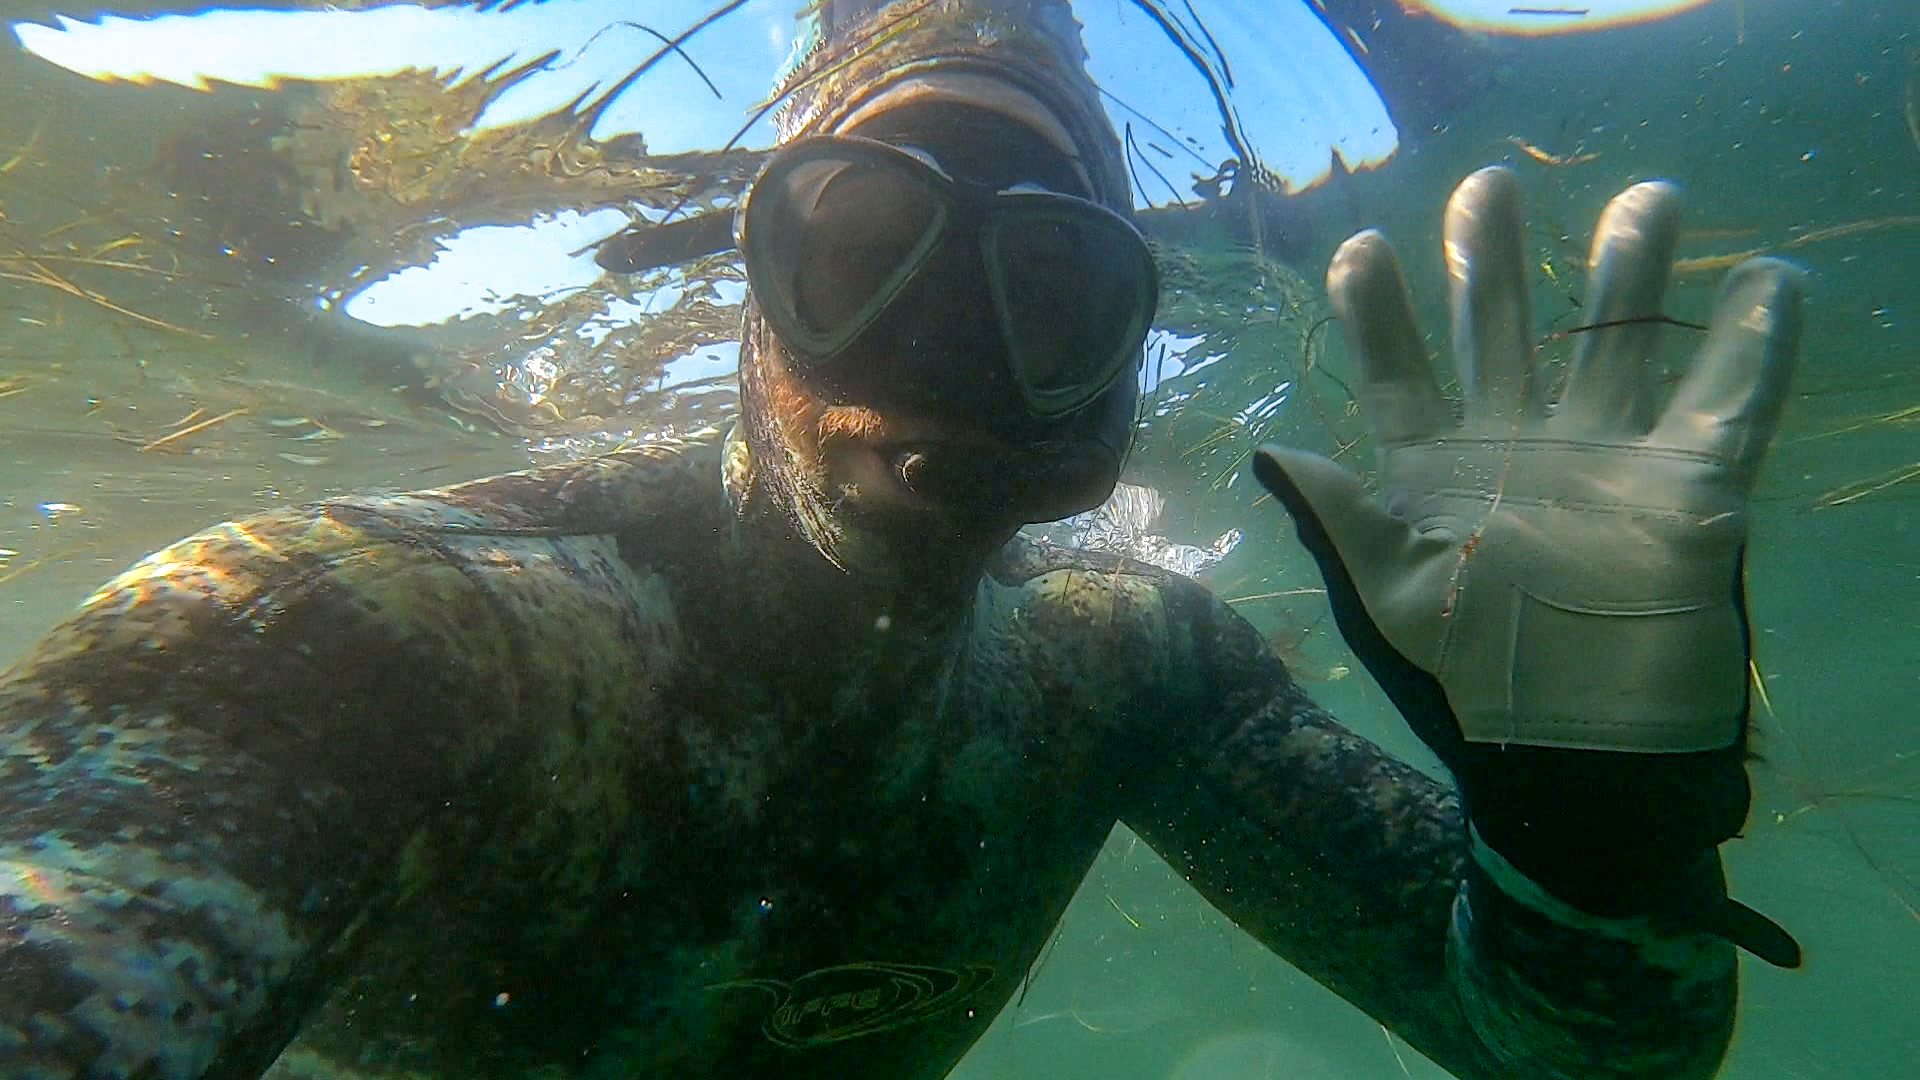 Snorkeler waving at camera underwater